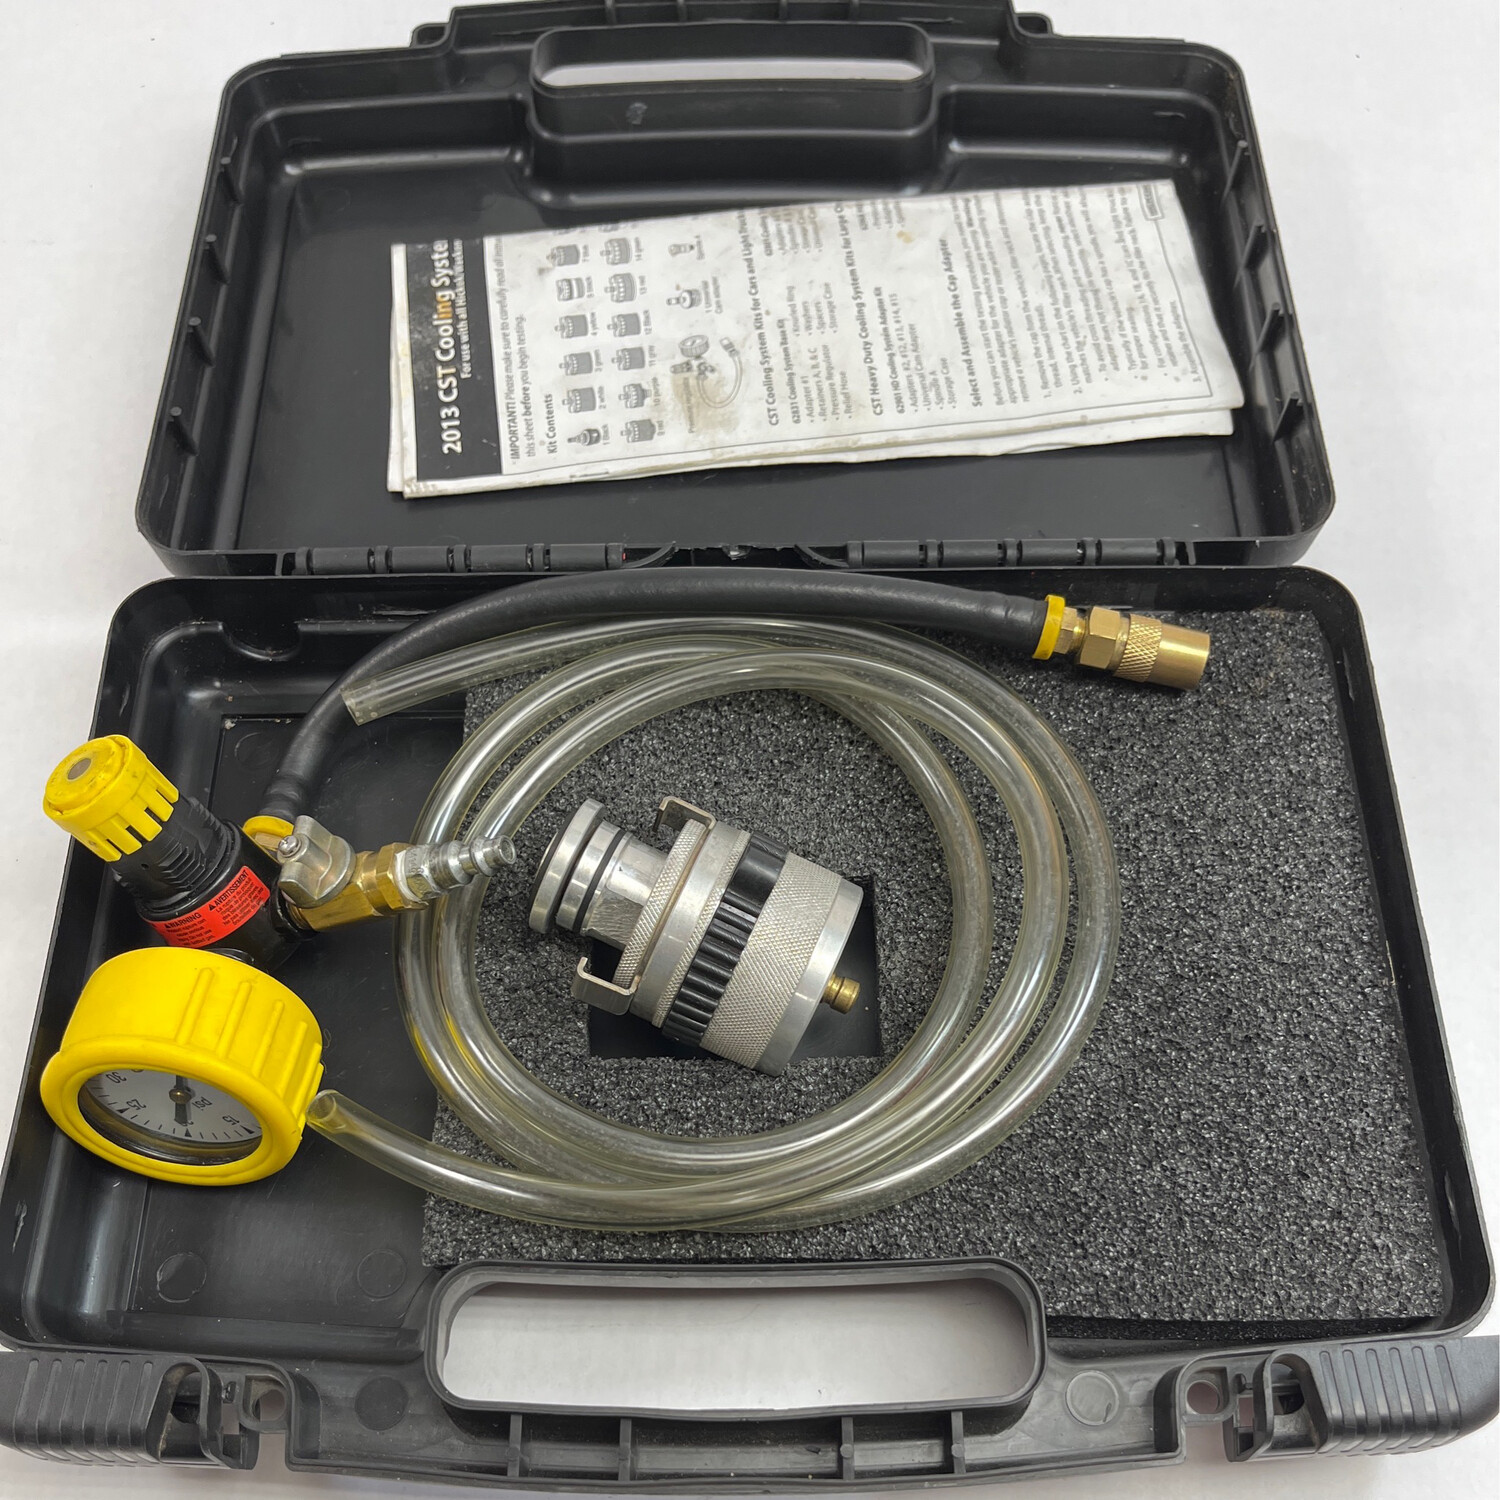 Hickok Waekon Cooling System Pressure Test Kit, 62831